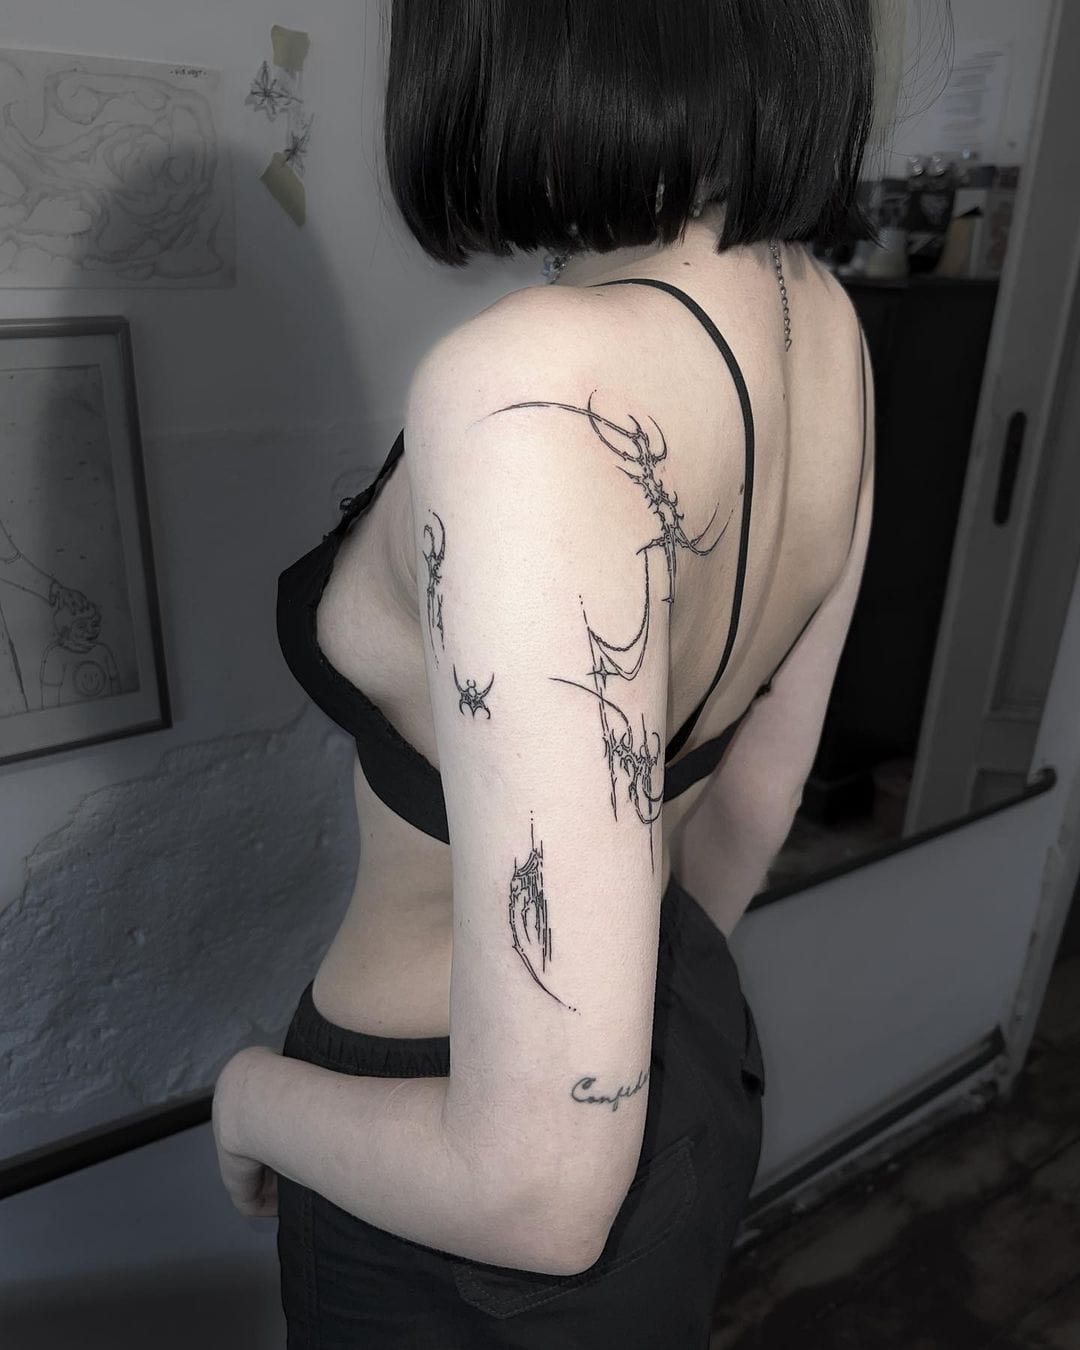 21 Cyber Sigilism Tattoos: A Modern Fusion of Tech and Mysticism